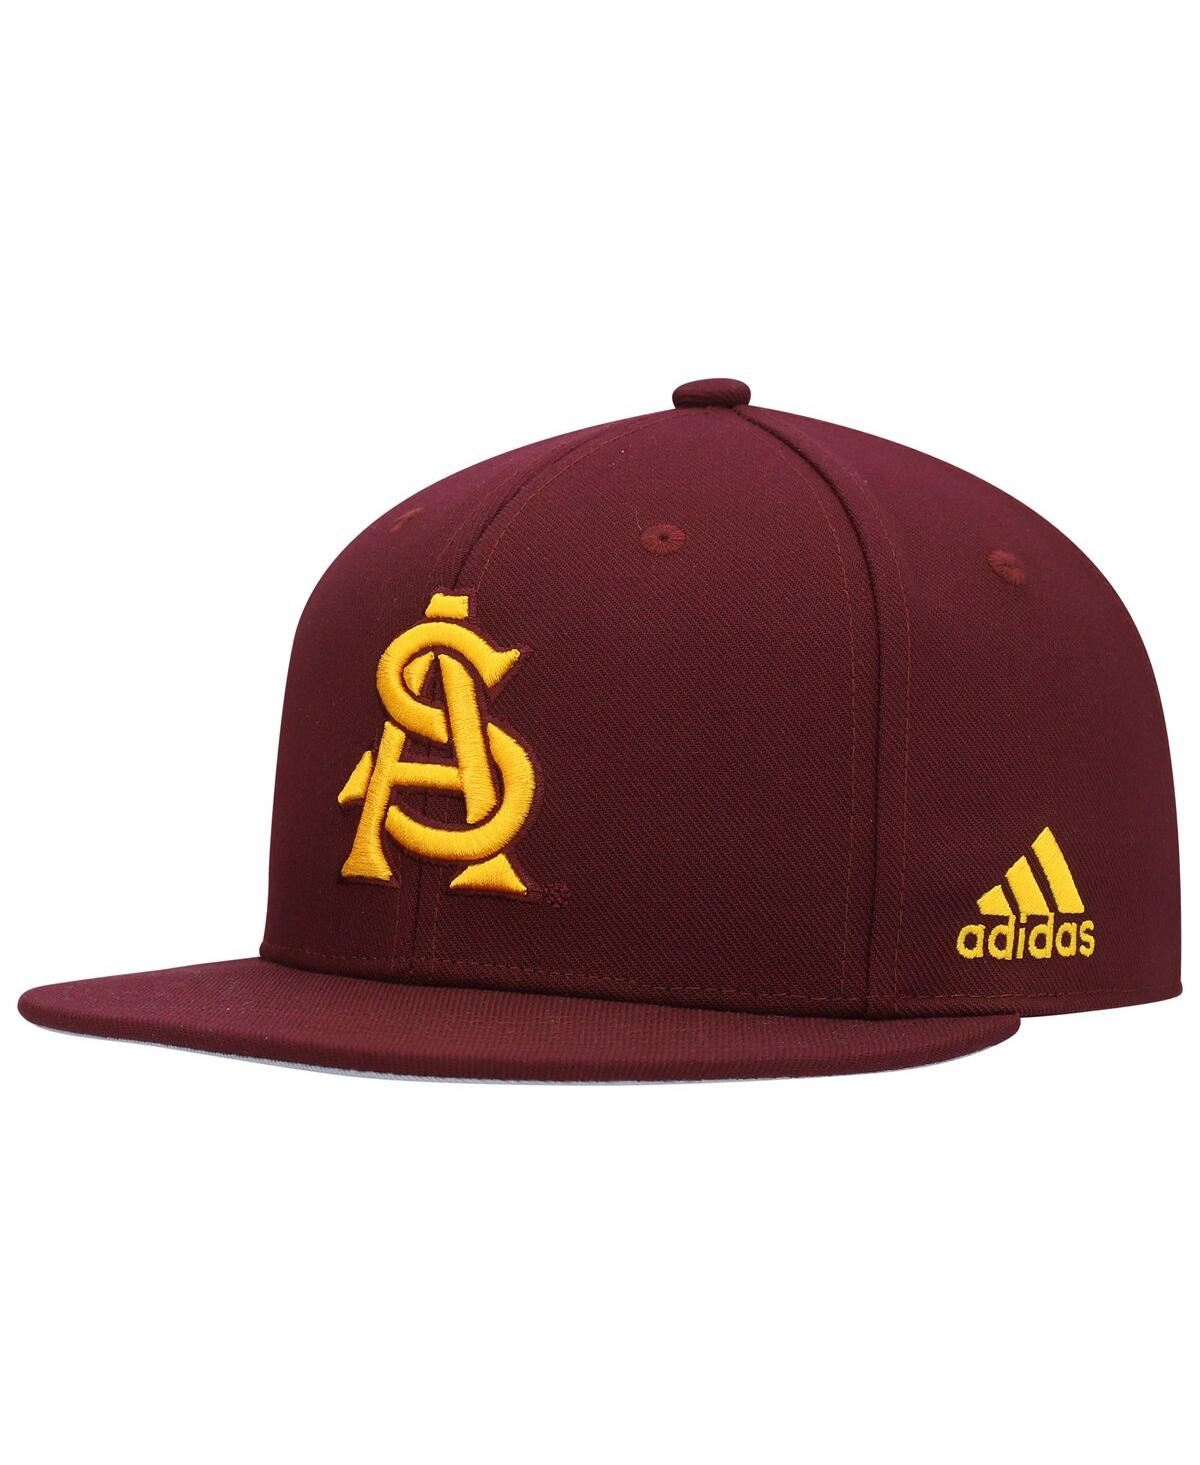 Shop Adidas Originals Men's Adidas Maroon Arizona State Sun Devils On-field Baseball Fitted Hat